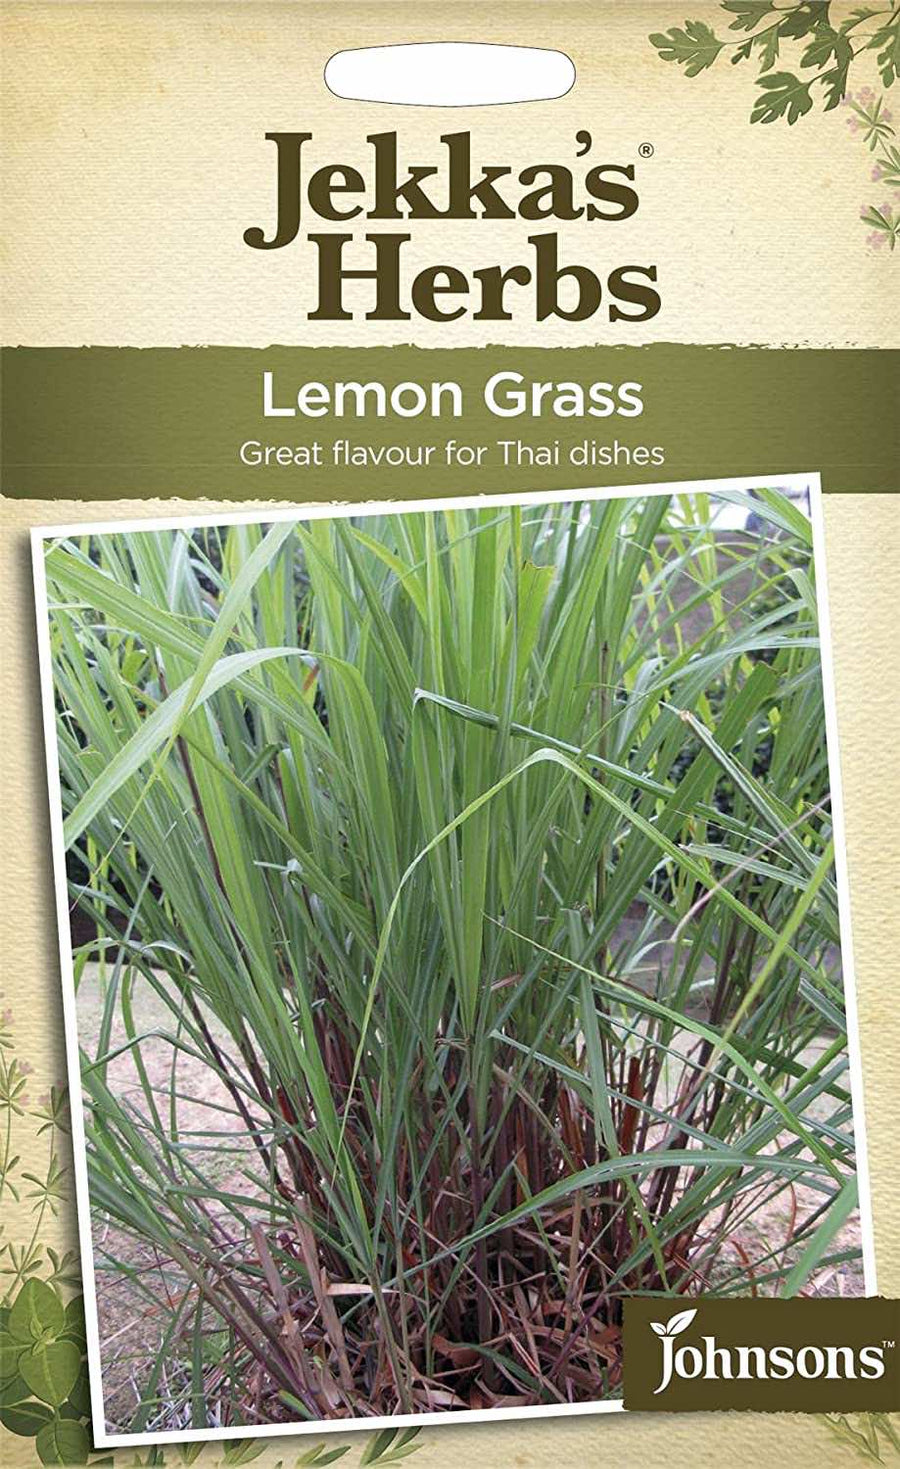 Jekkas Herbs Lemon Grass Seeds - LGC